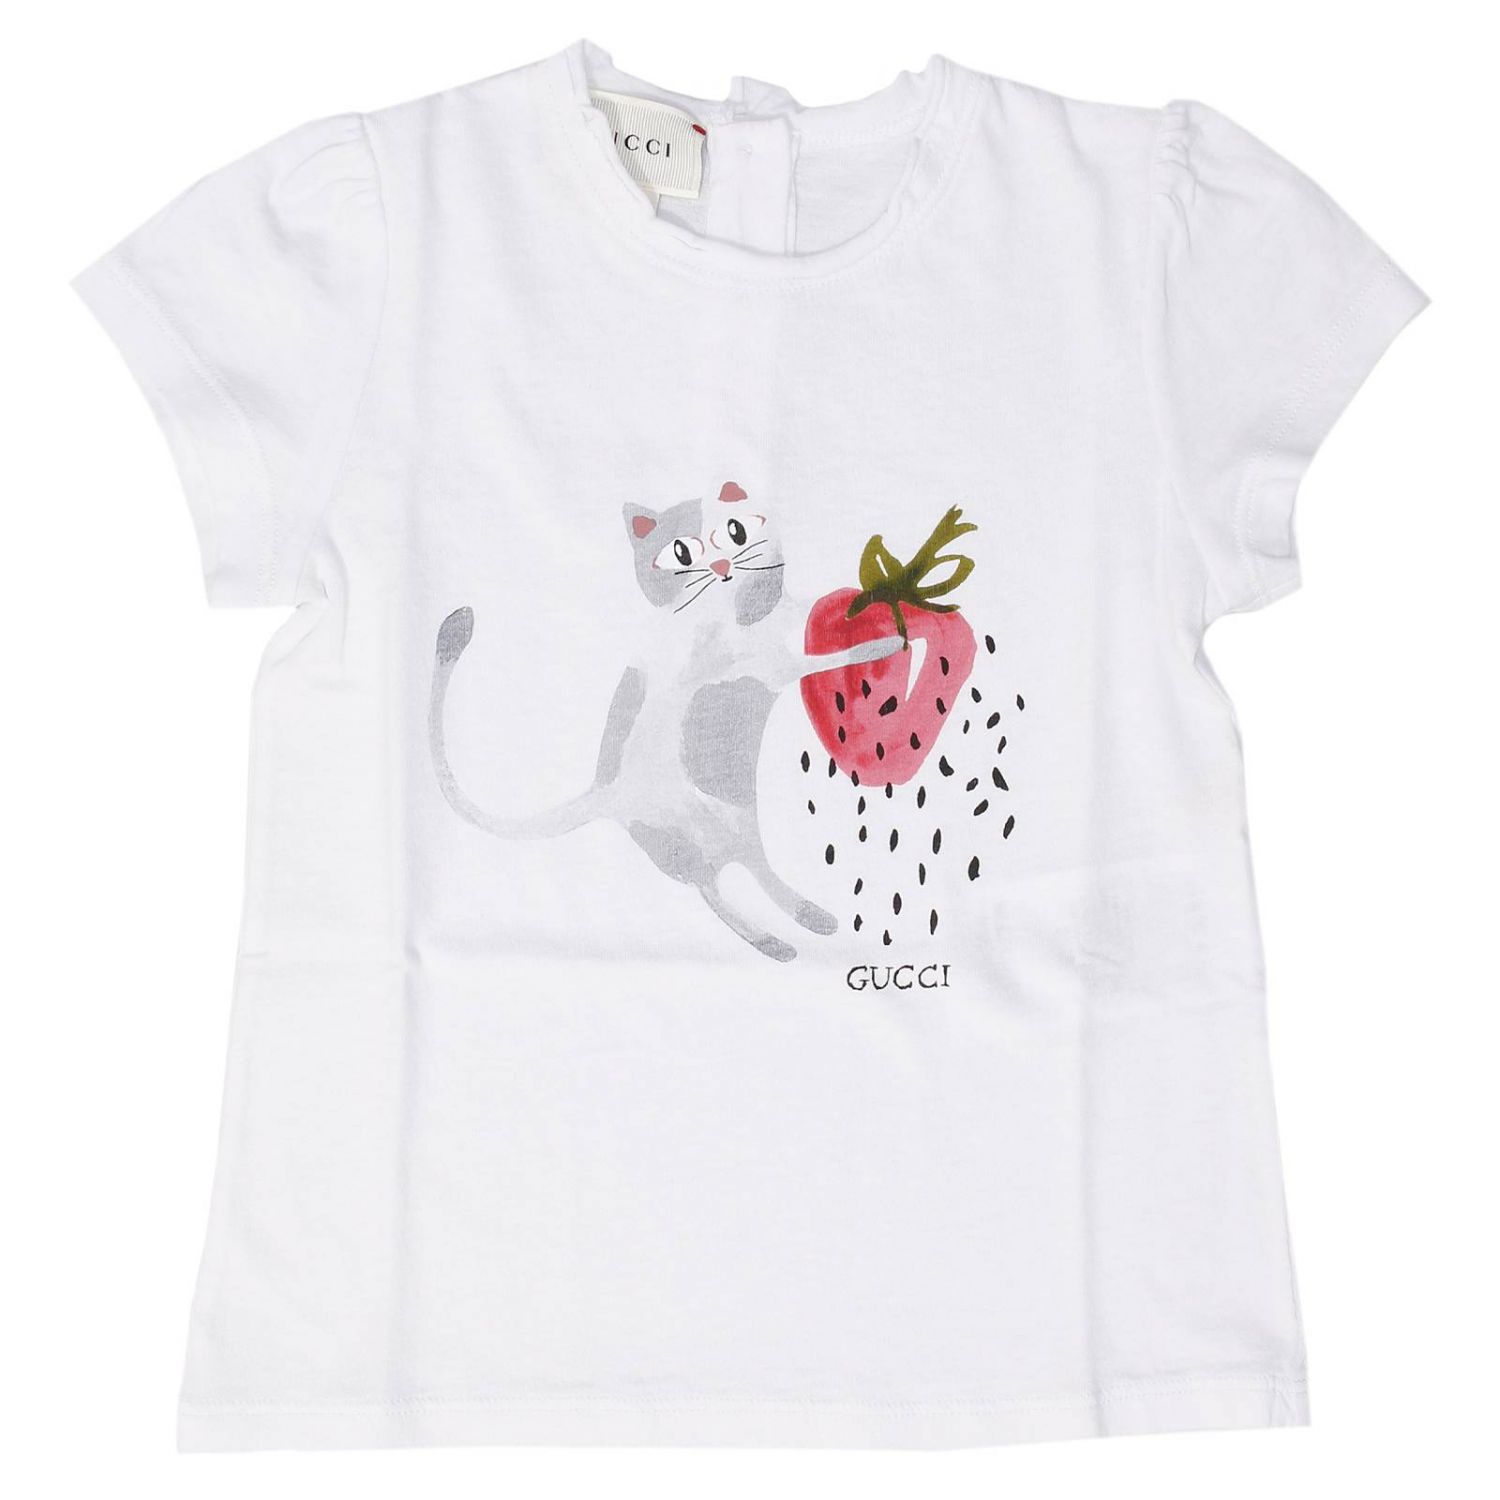 Gucci Outlet: | T-Shirt Gucci Kids White | T-Shirt Gucci 411499 x3d01 ...